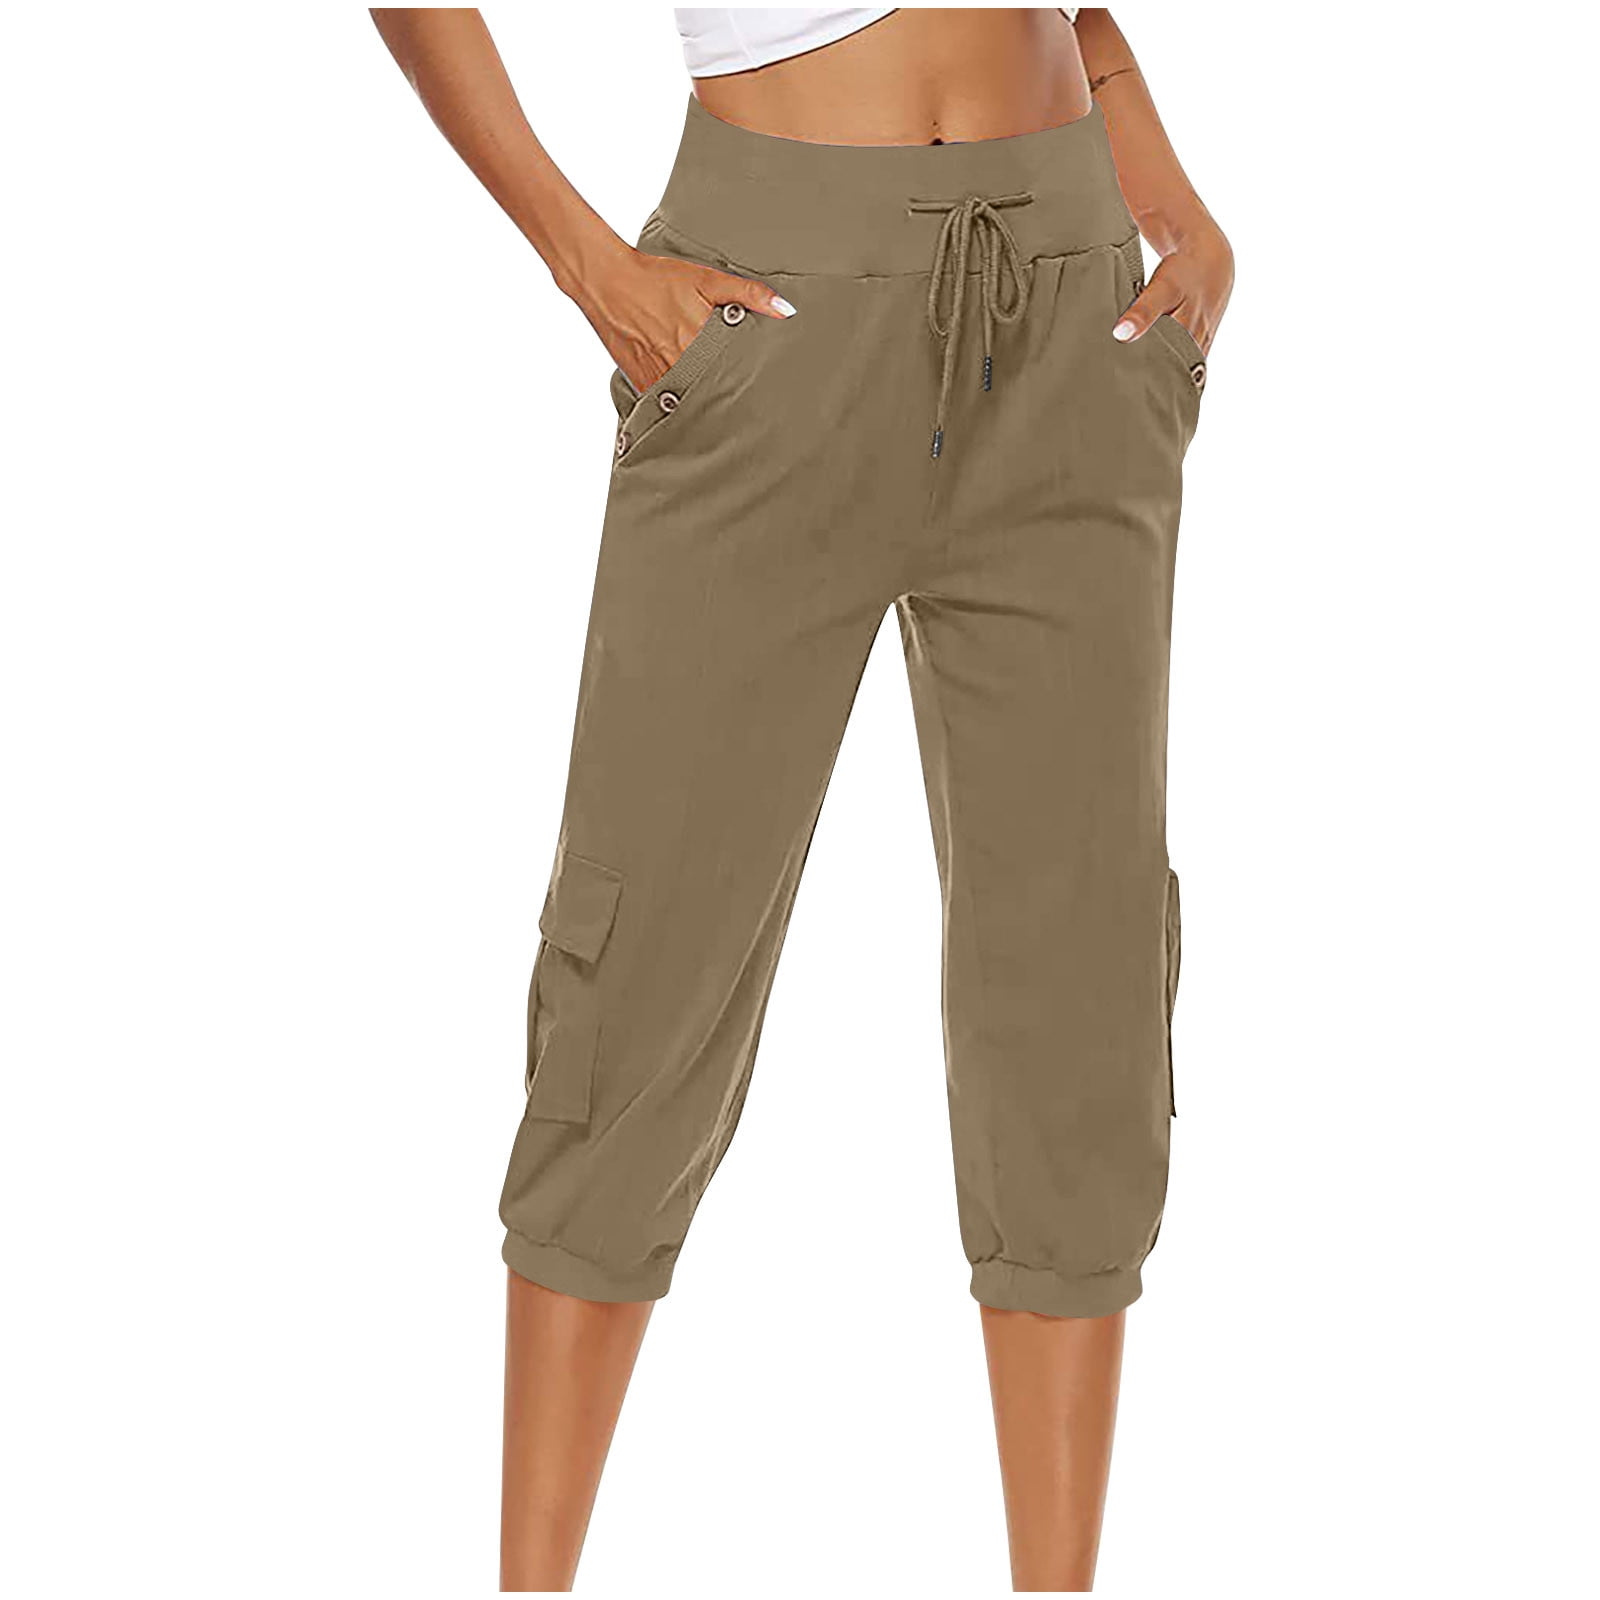 Capri Pants for Women Cotton Linen Plus Size Cargo Pants Capris Elastic  High Waisted 3/4 Slacks with Multi Pockets (Small, Black)